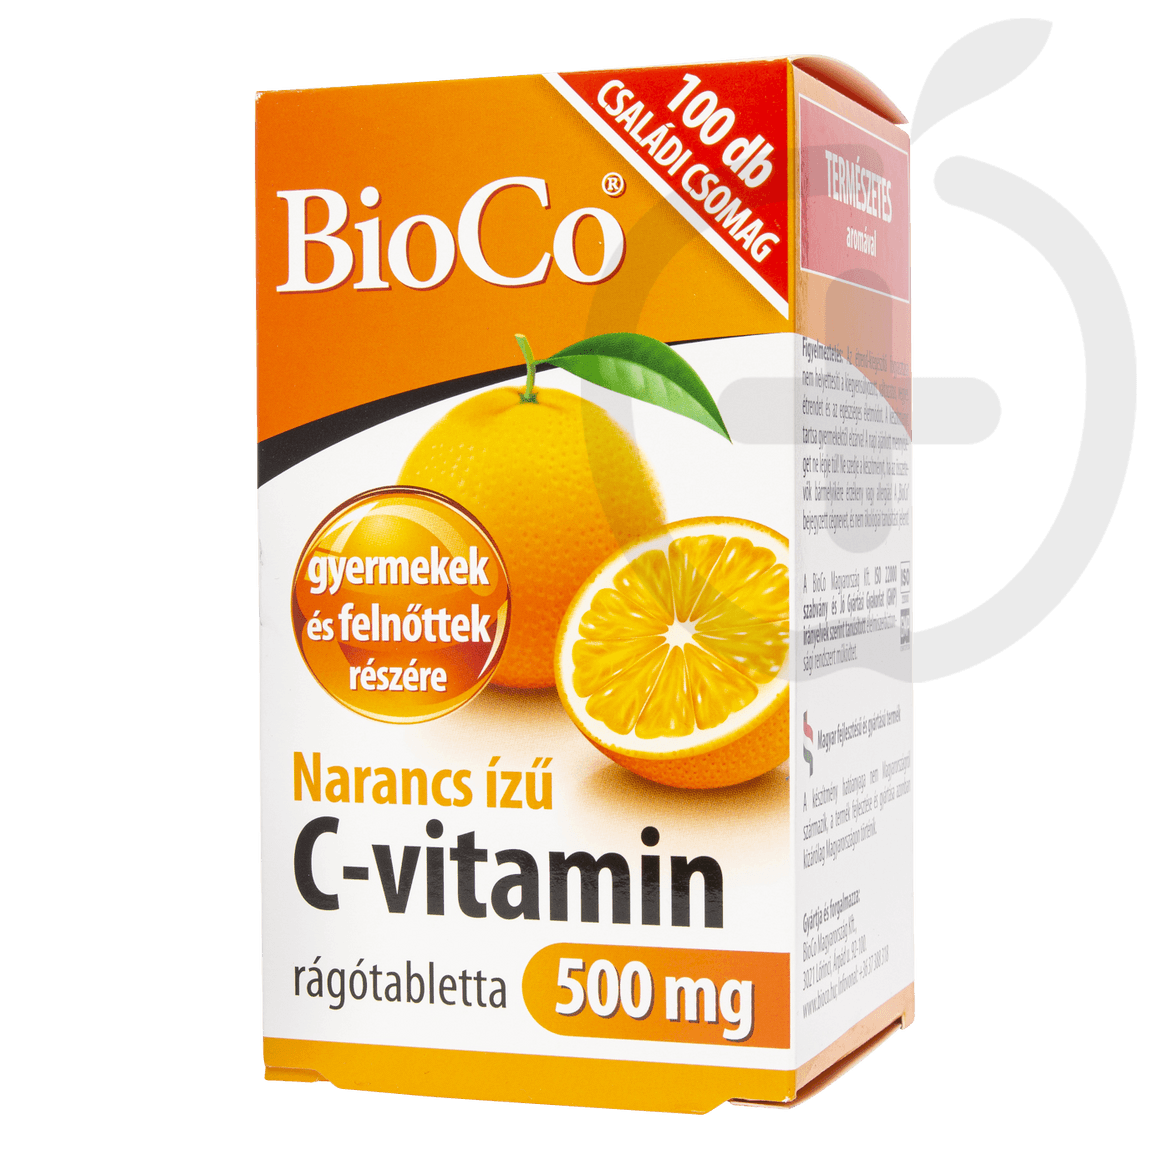 BioCo Narancs ízű C-vitamin 500 mg rágótabletta